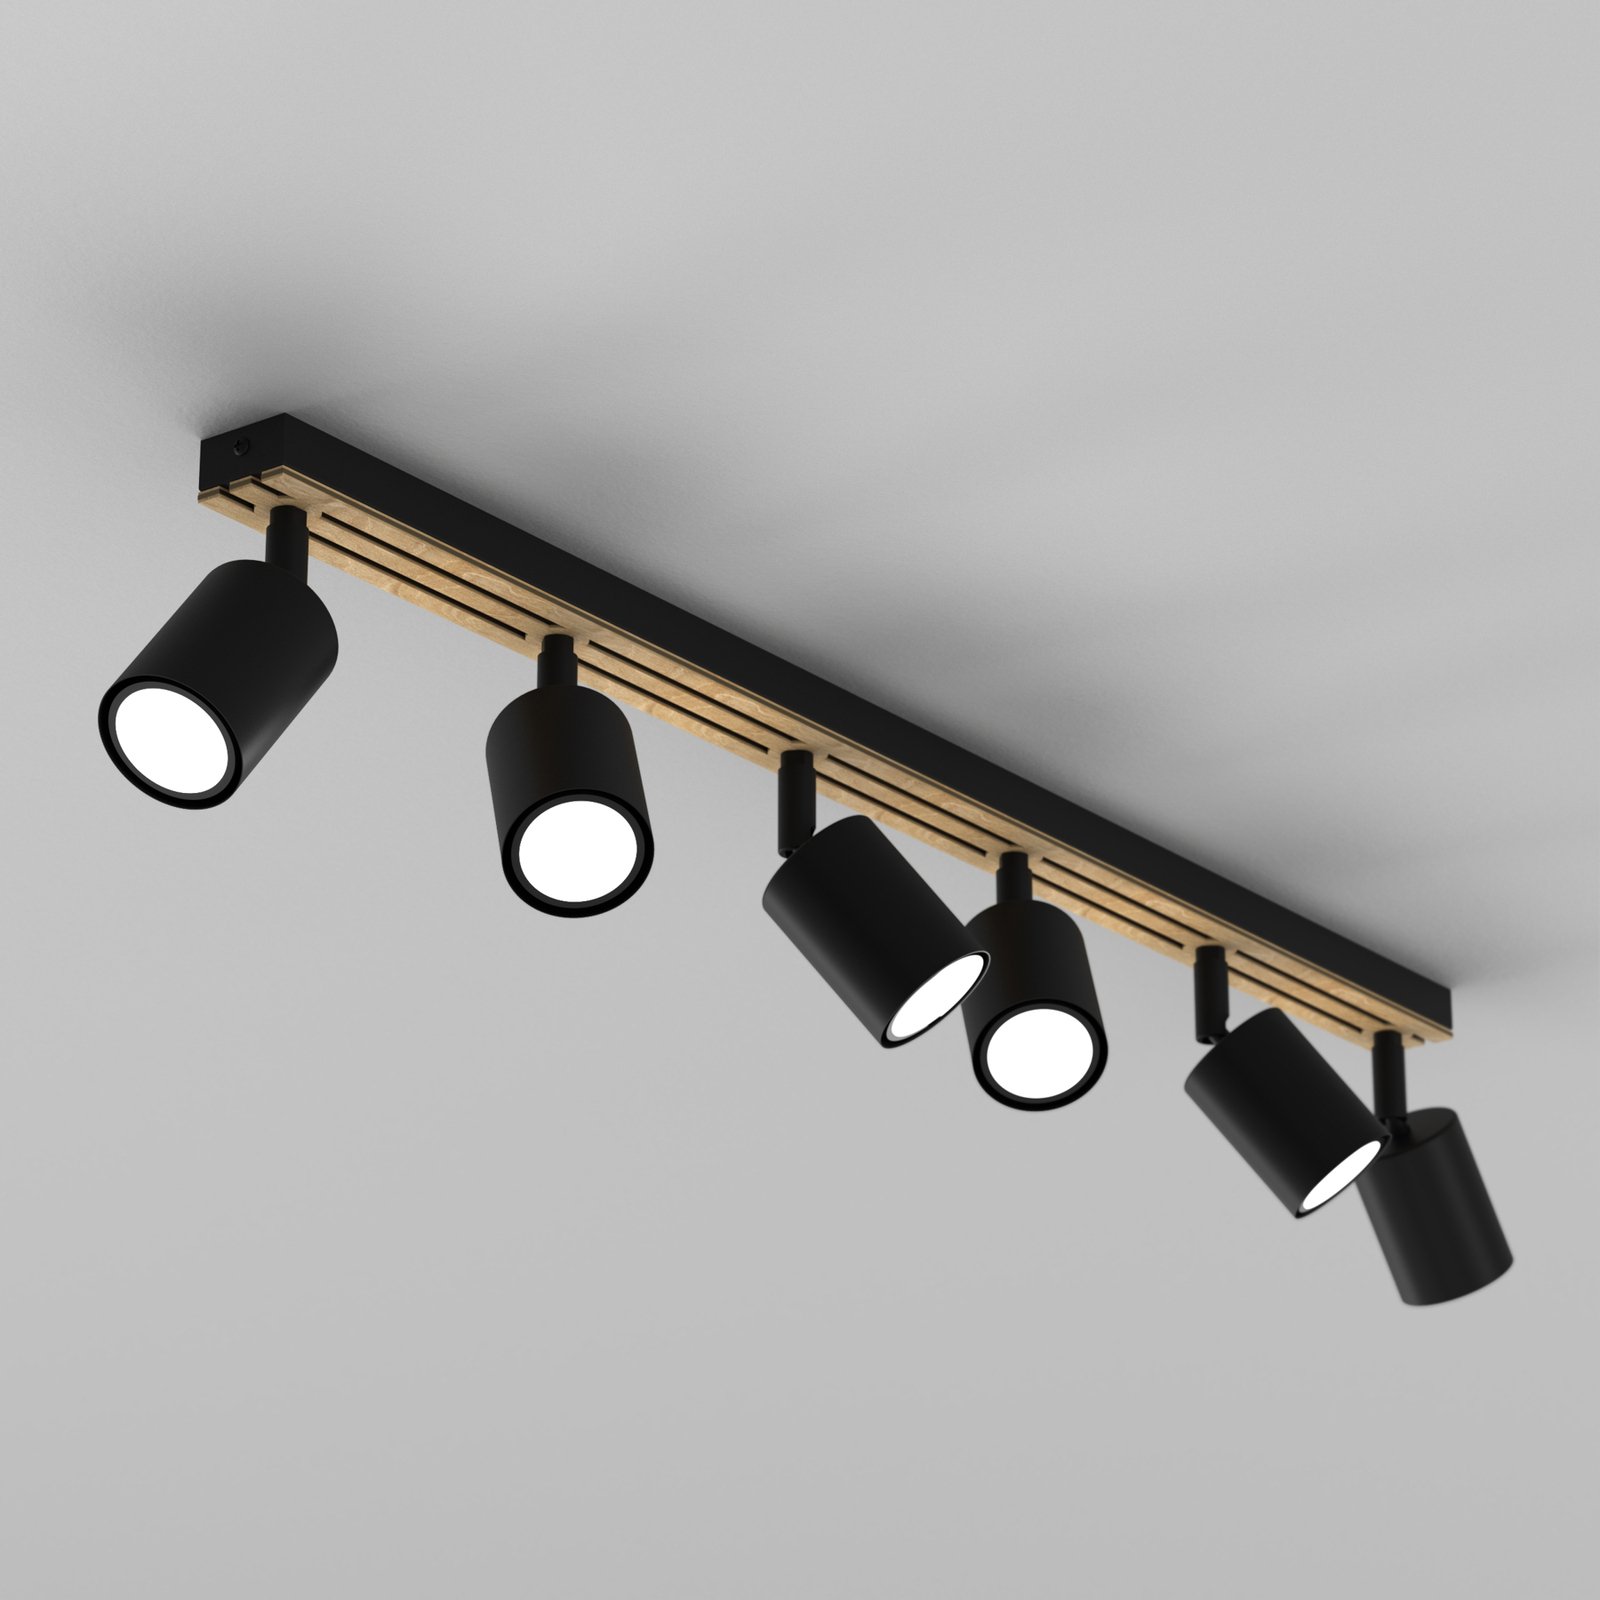 Envostar Tino spot plafond à 6 lampes noir/bois